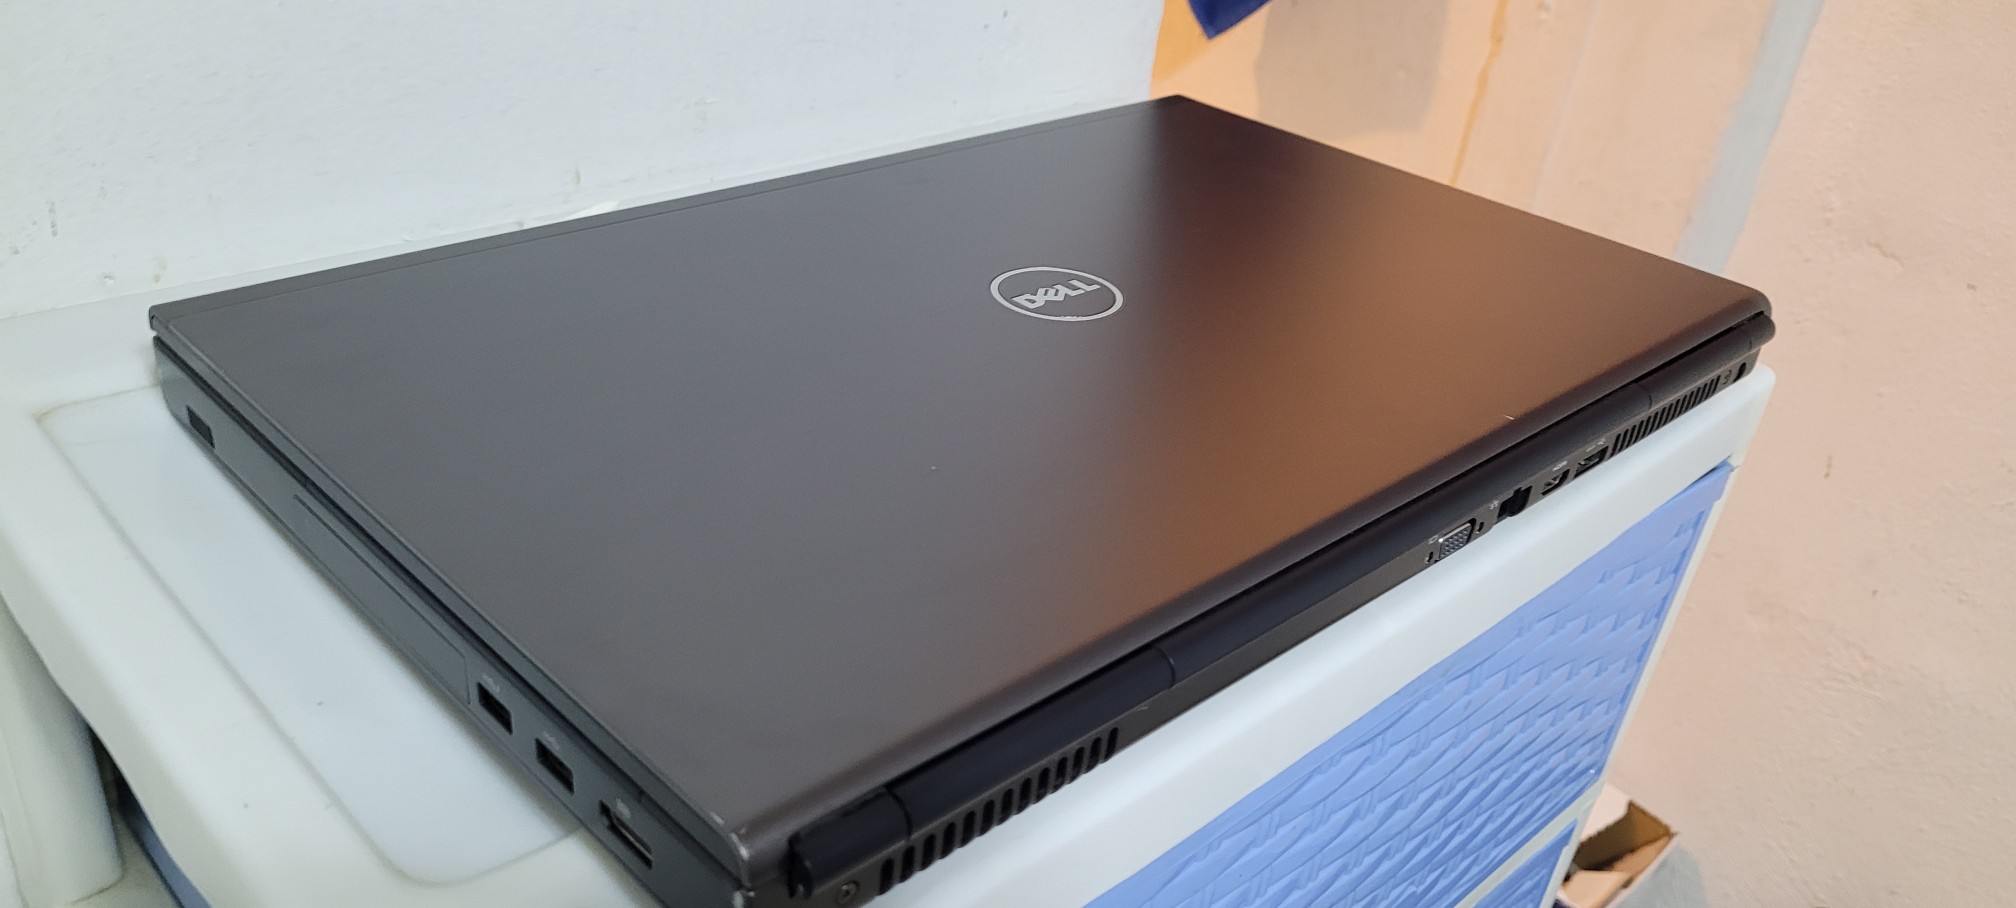 computadoras y laptops - Dell m6700 17 Pulg Core i7 Ram 16gb Disco 500gb SSD Nvidea 4gb 2